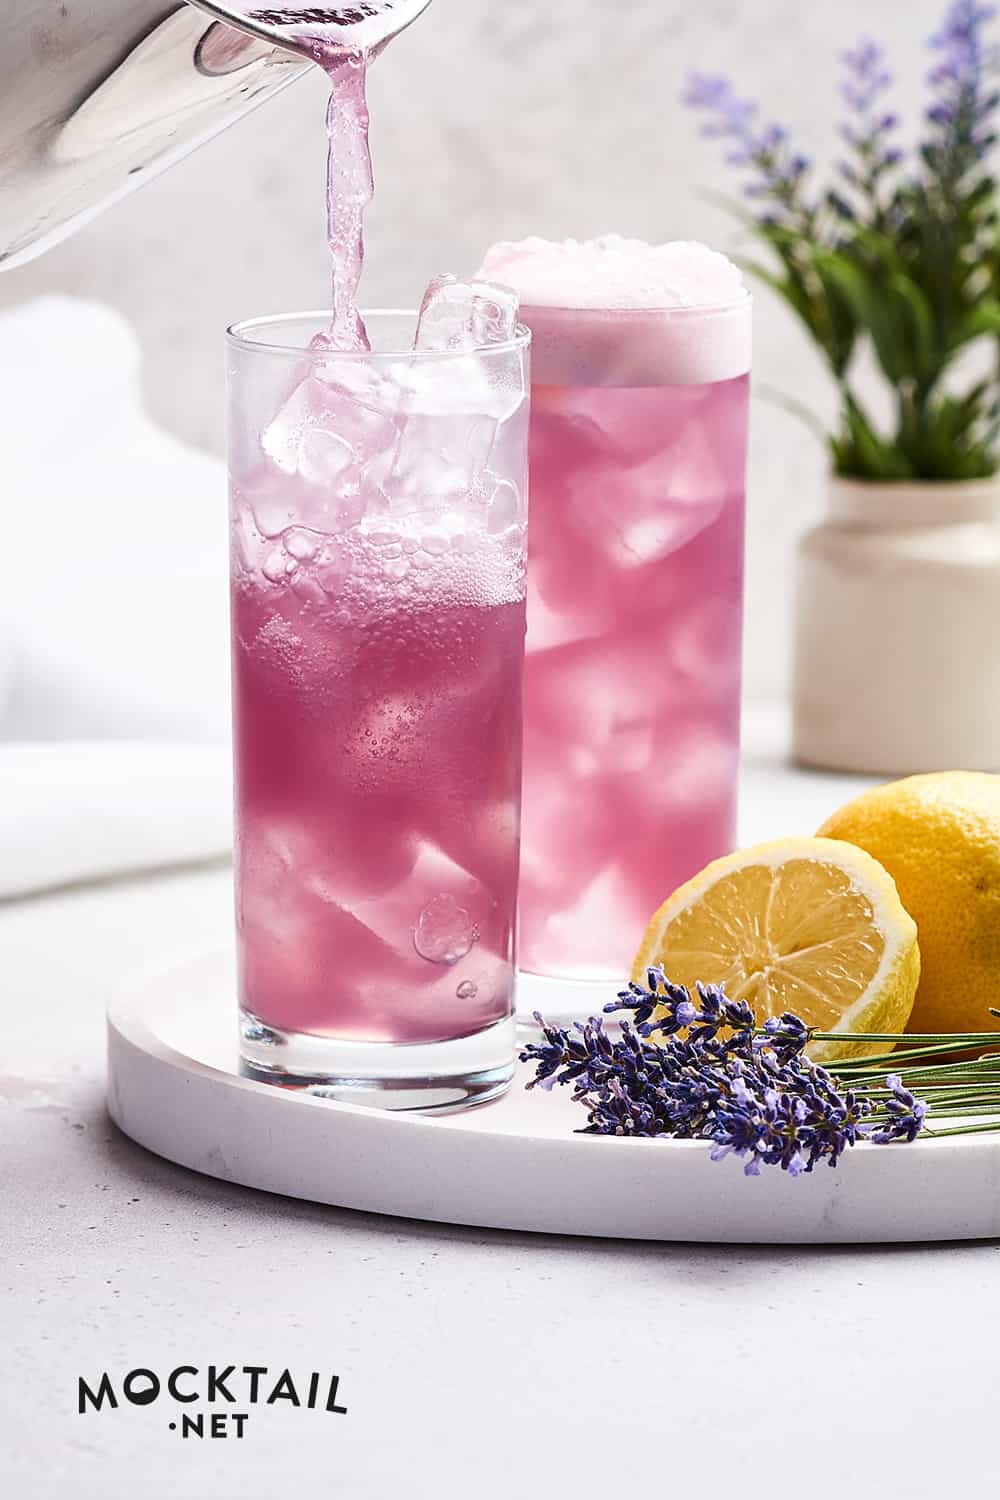 Ingredients for Lavender Lemonade